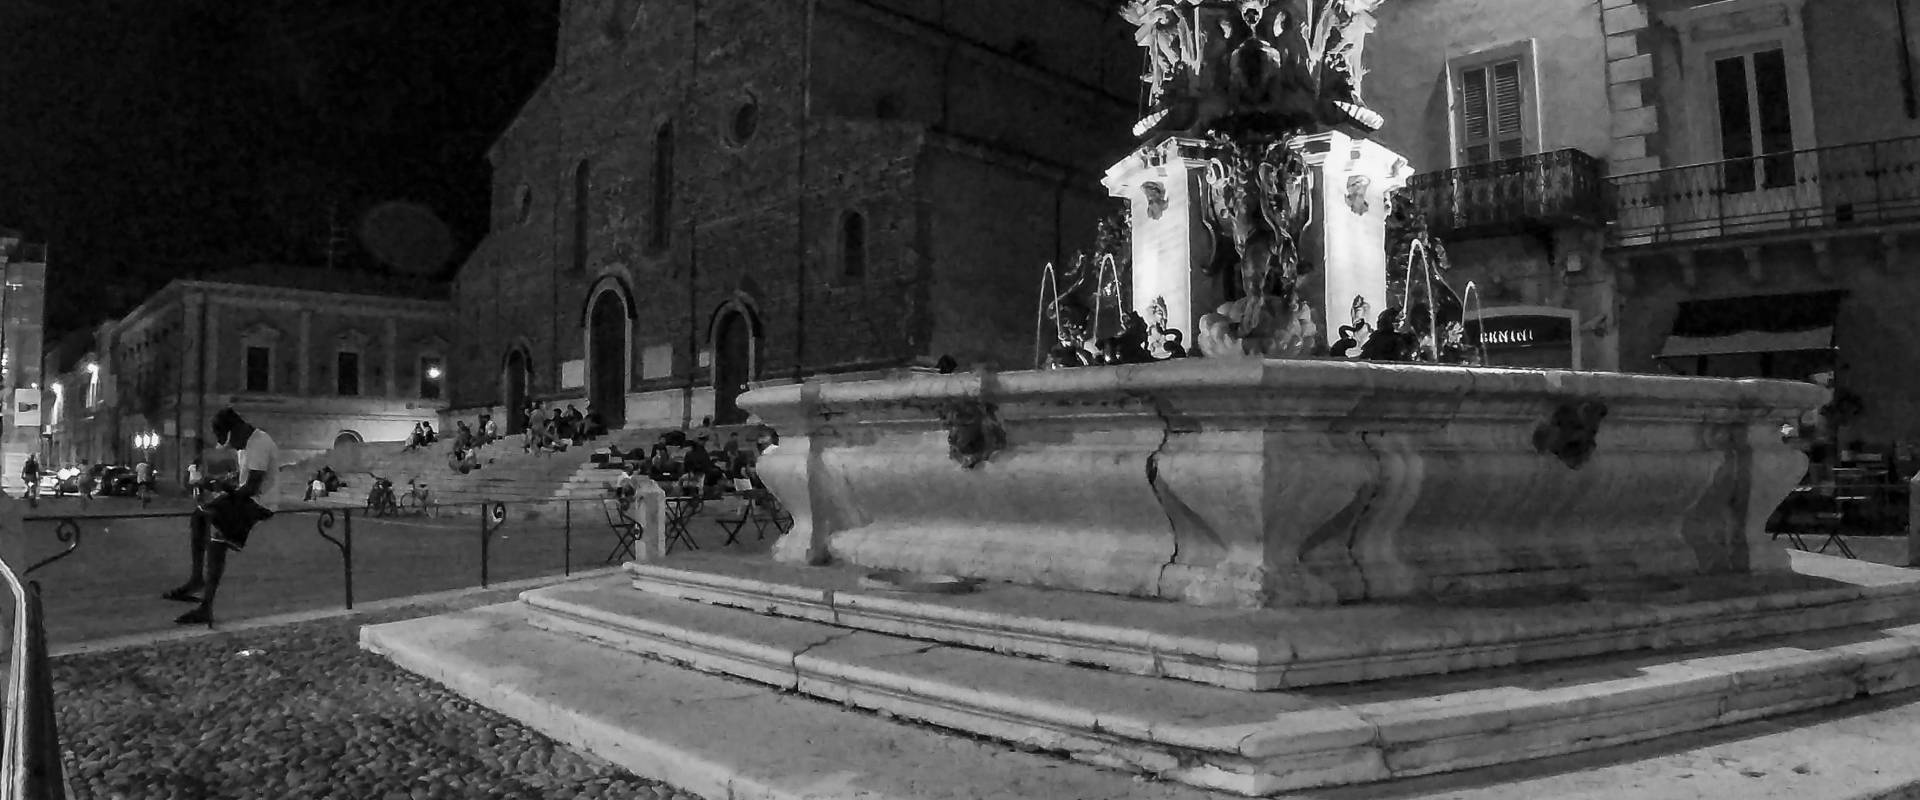 Night in the town-2 fontana monumentale foto di Lorenzo Gaudenzi